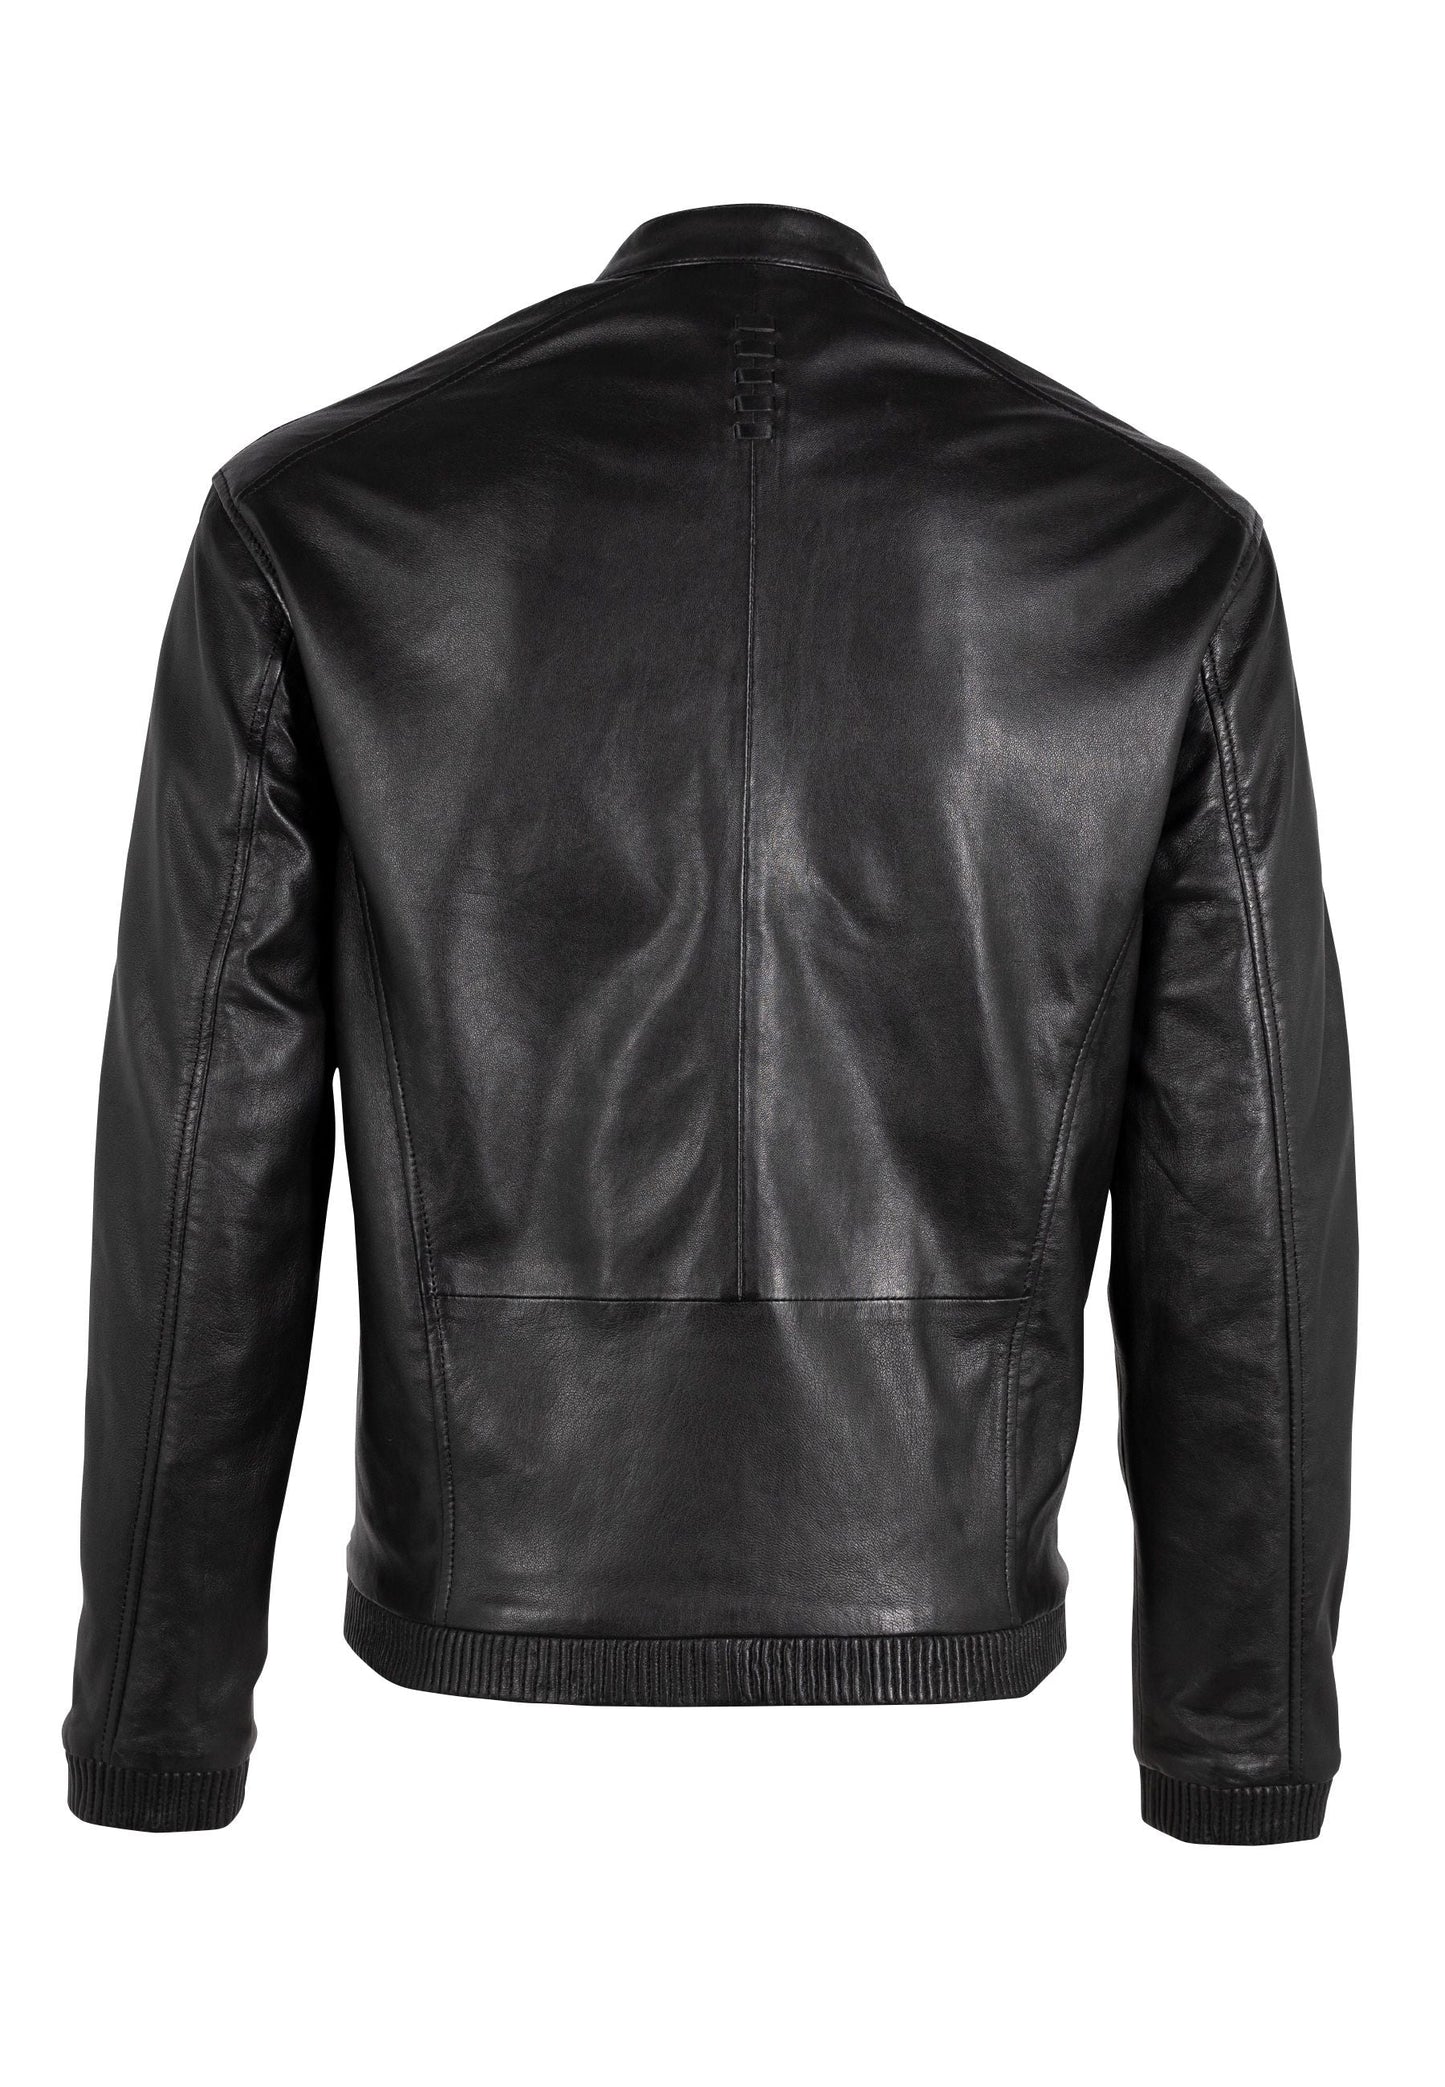 Airth LF Leather Jacket, Black